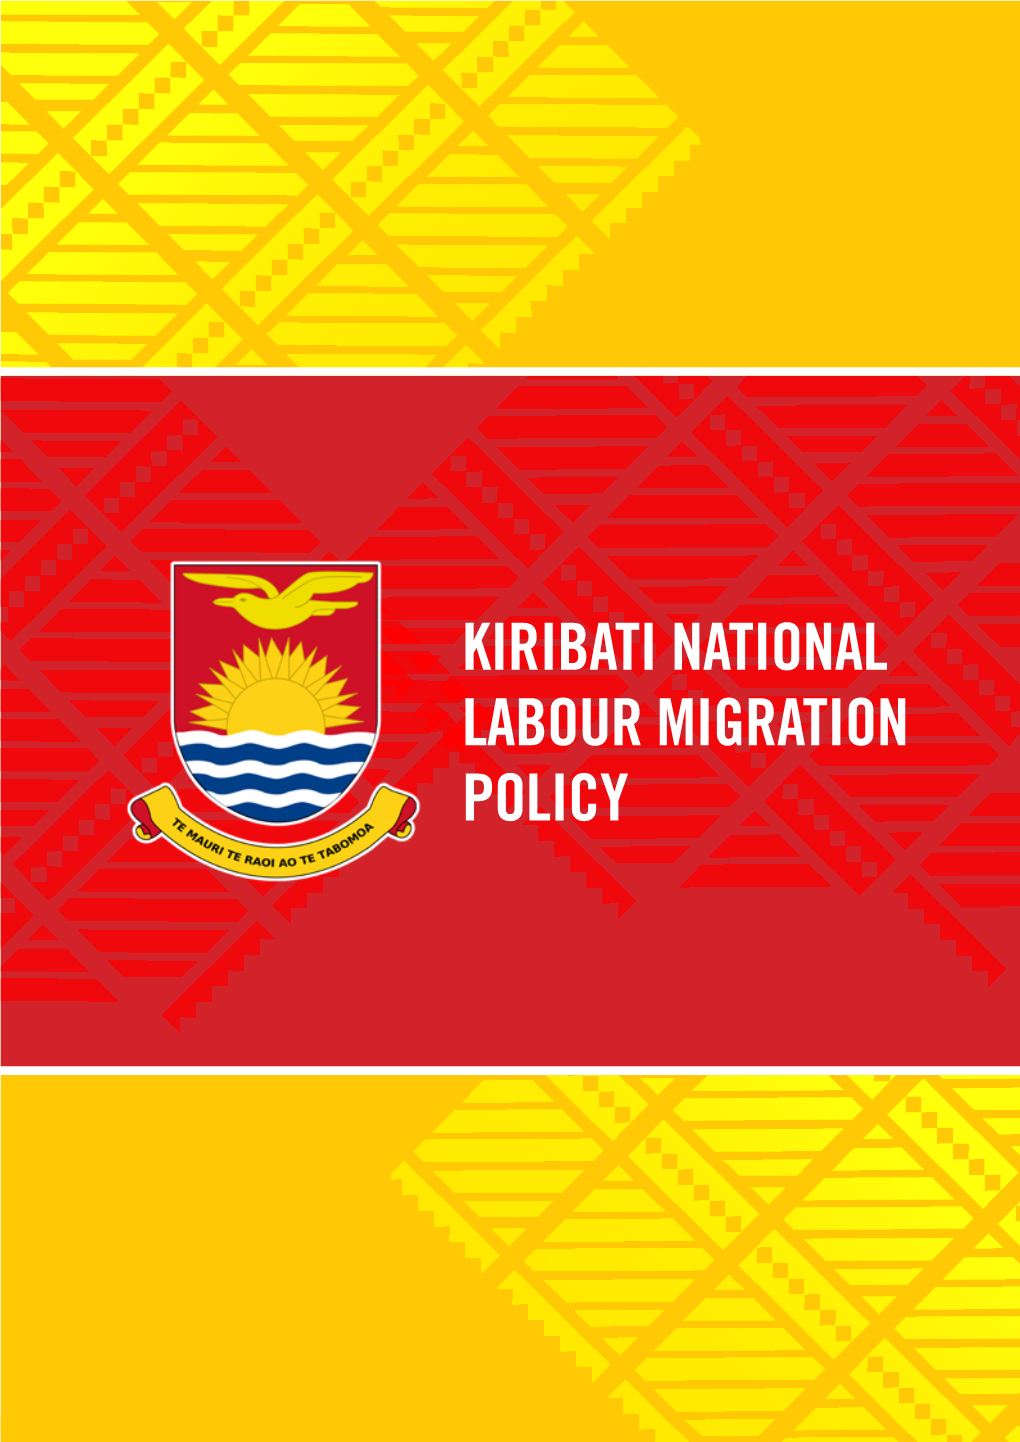 Kiribati National Labour Migration Policy Kiribati National Labour Migration Policy